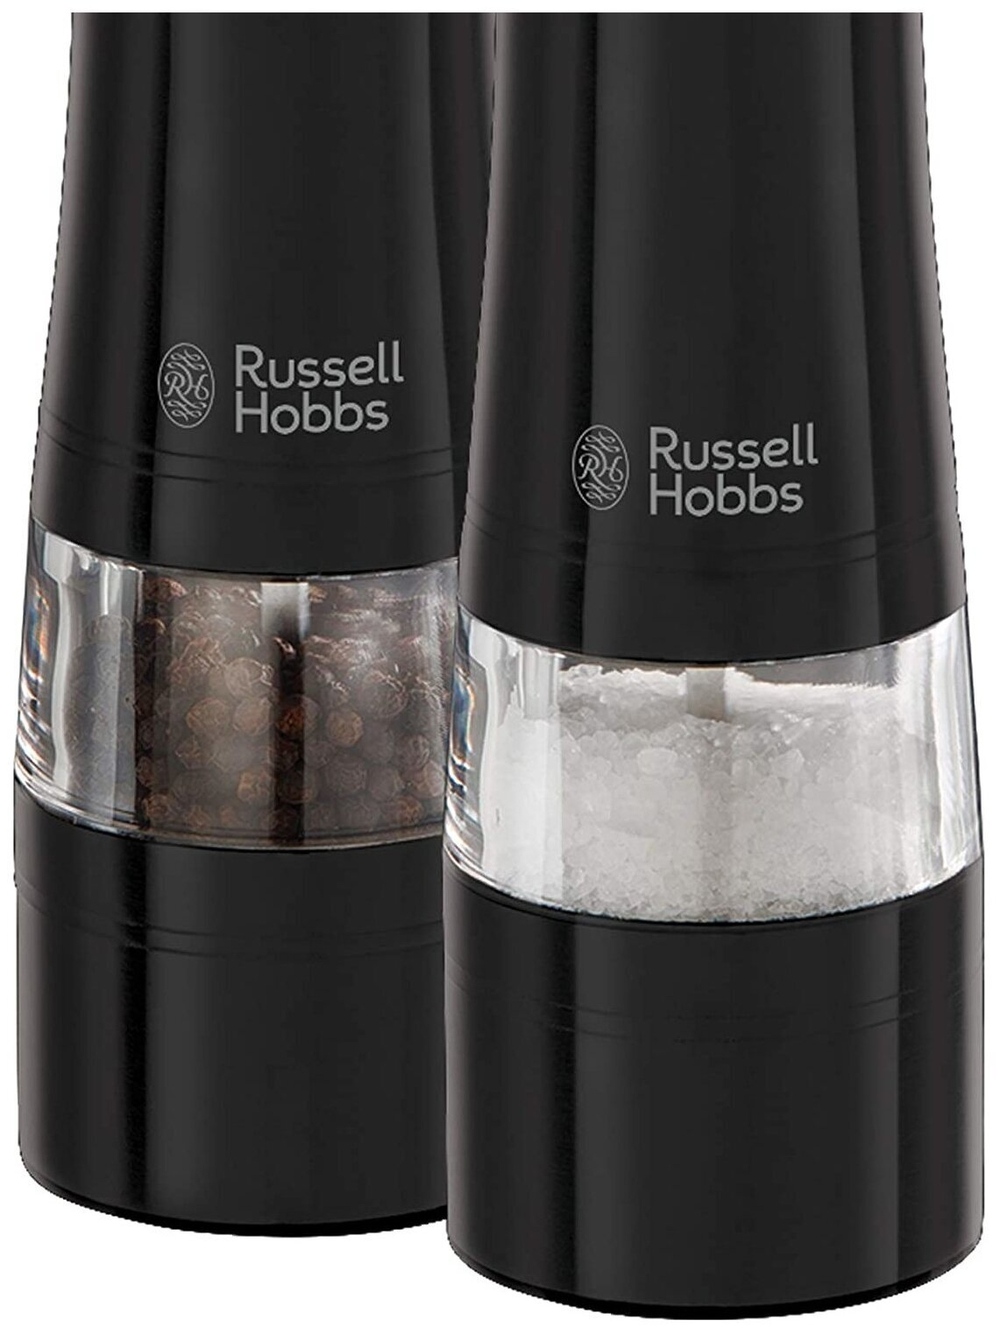 Russell Hobbs Измельчители соли и перца Classics